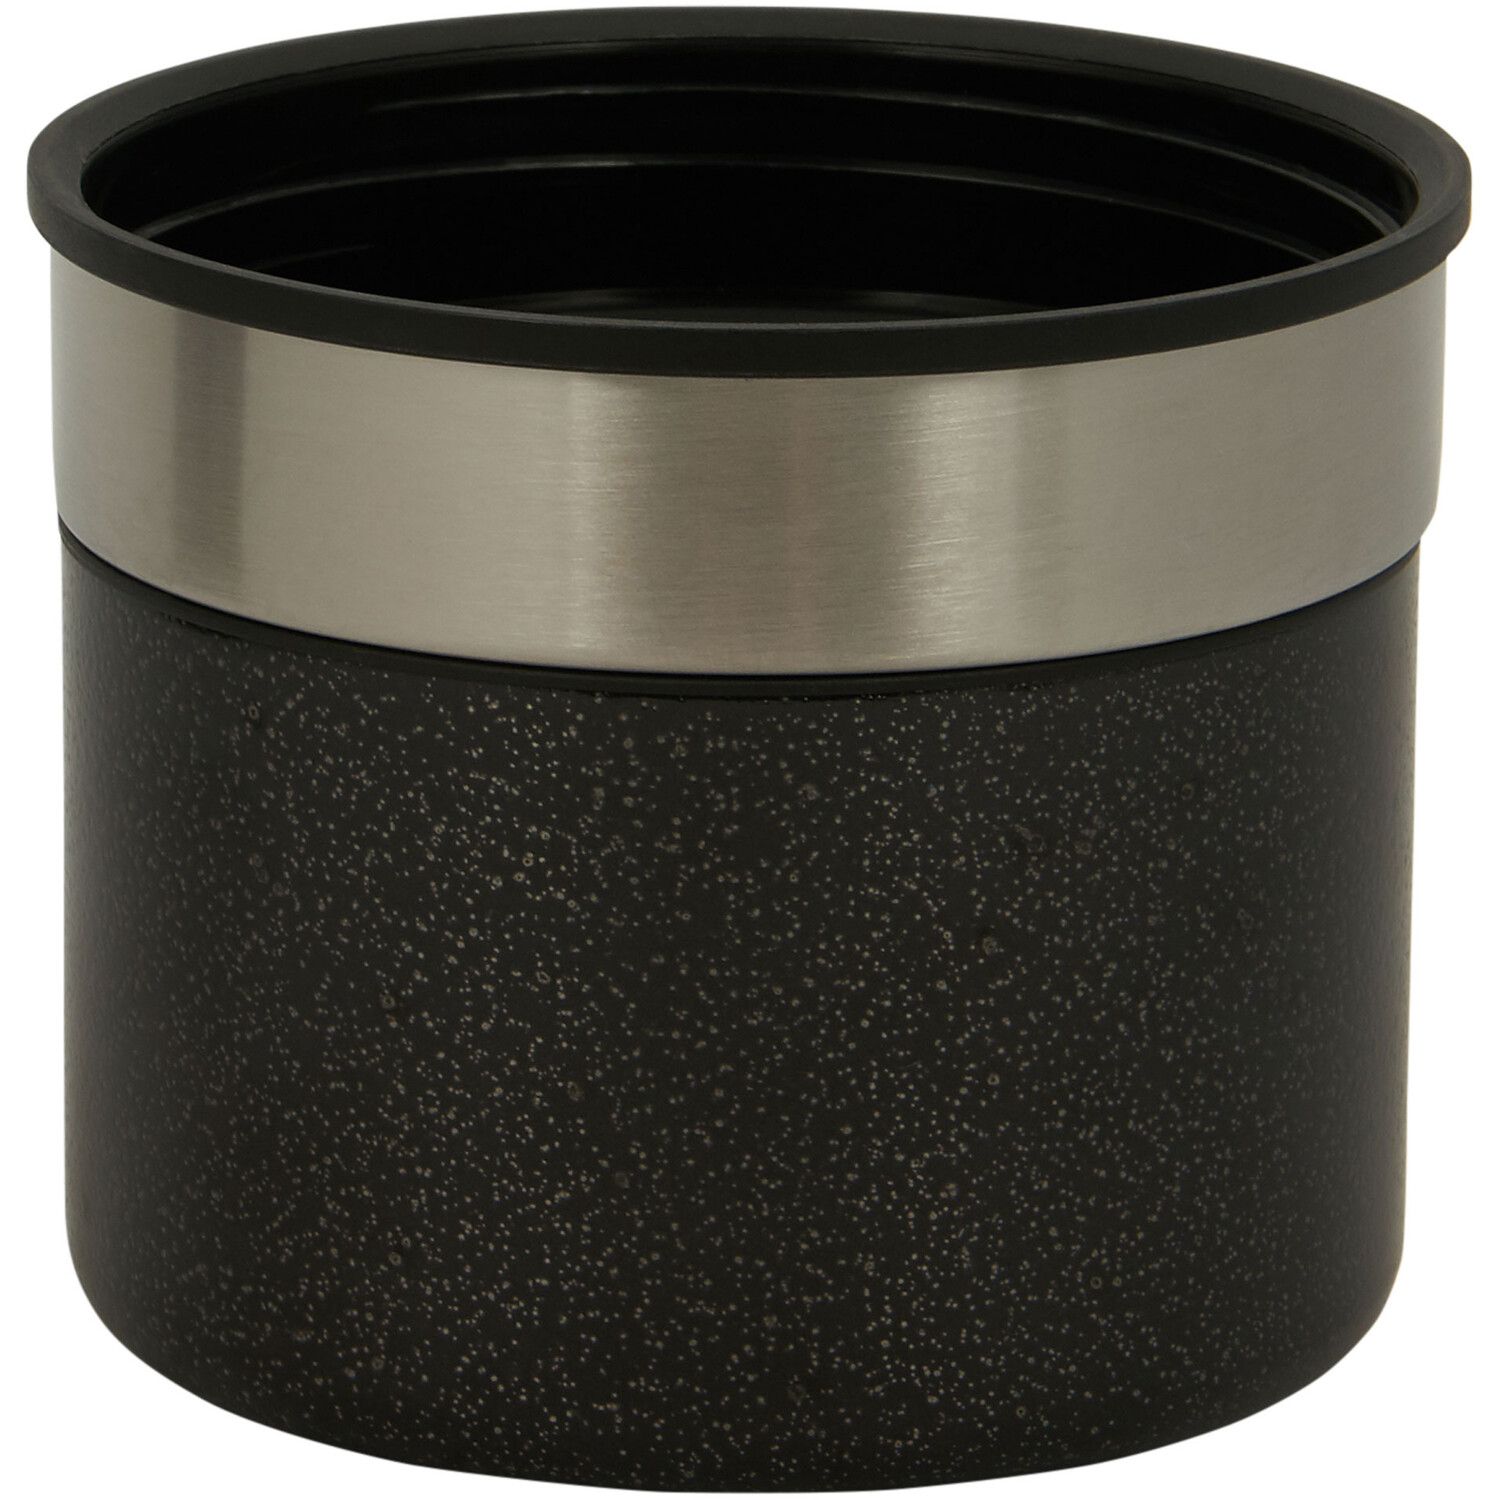 Nitro 2-Cup Hammered Flask - Black Image 4